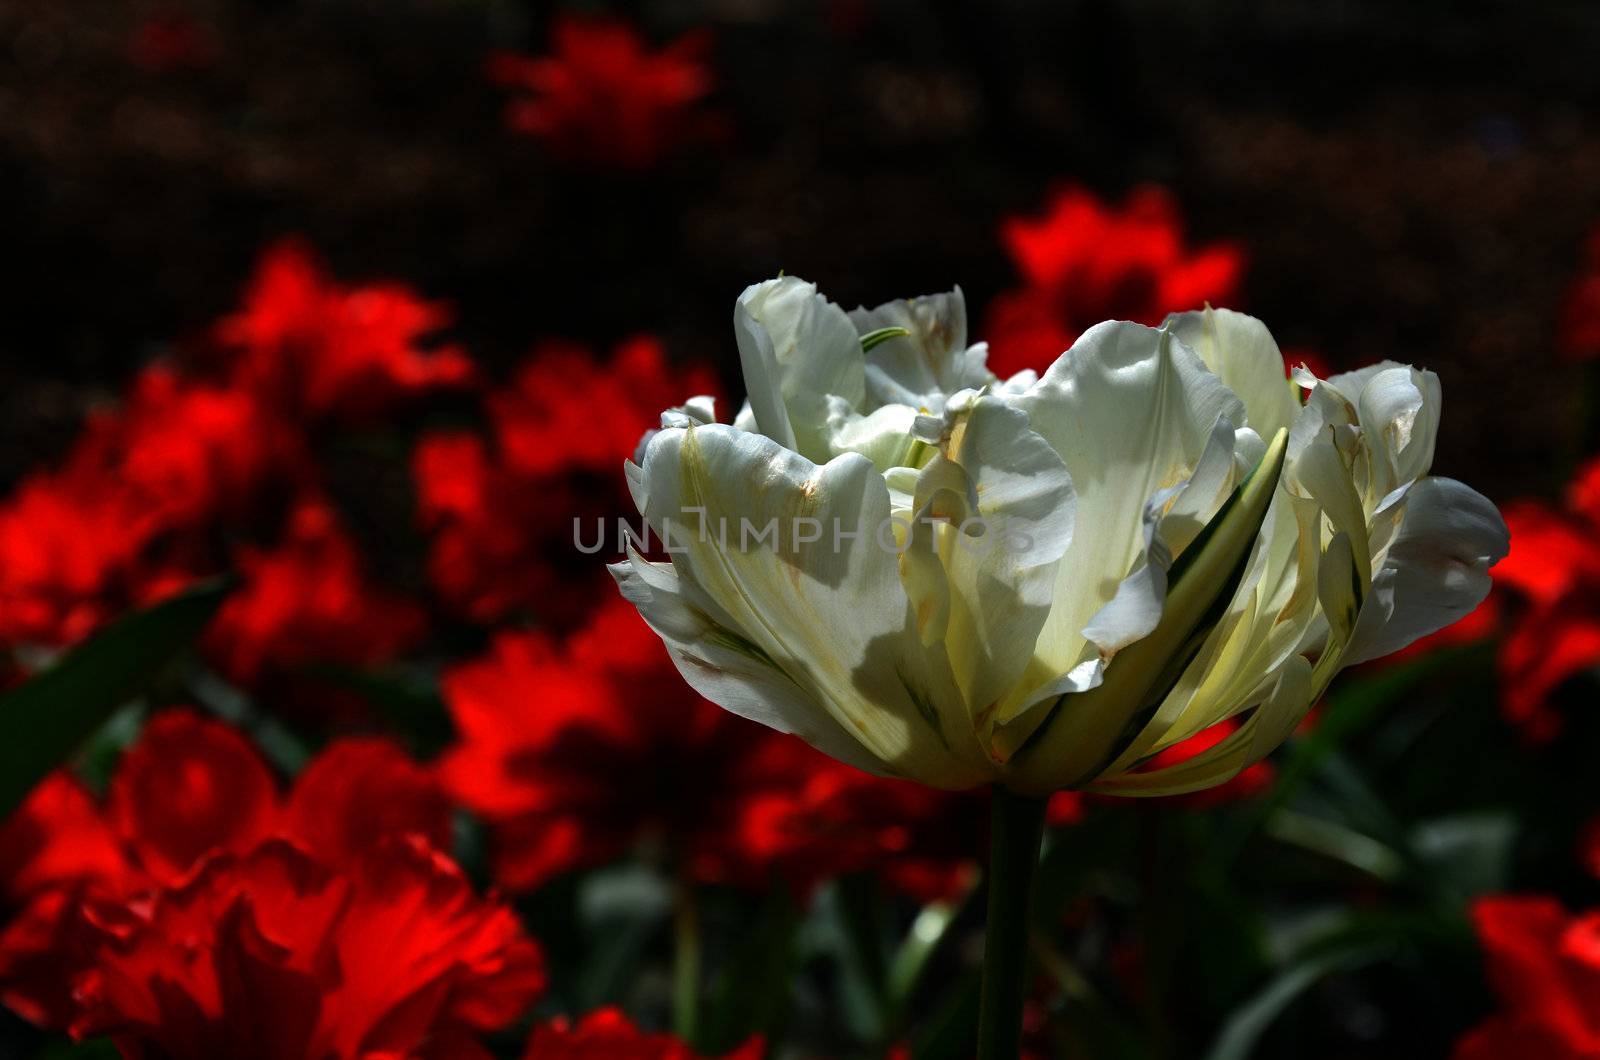 Single white tulip by ingperl